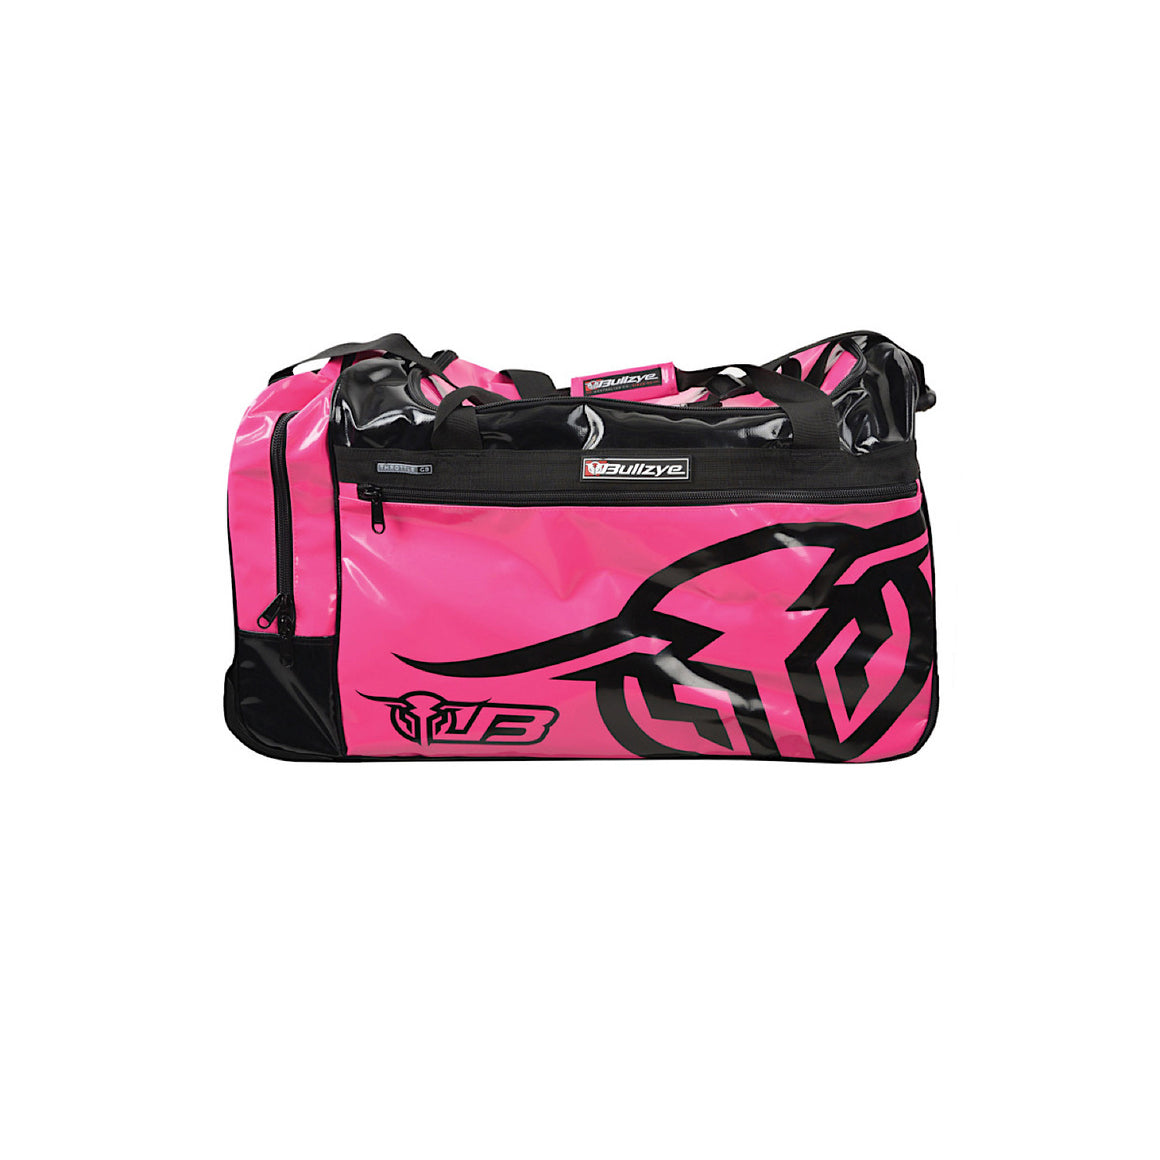 Bullzye Throttle Gear Bag Pink/Black